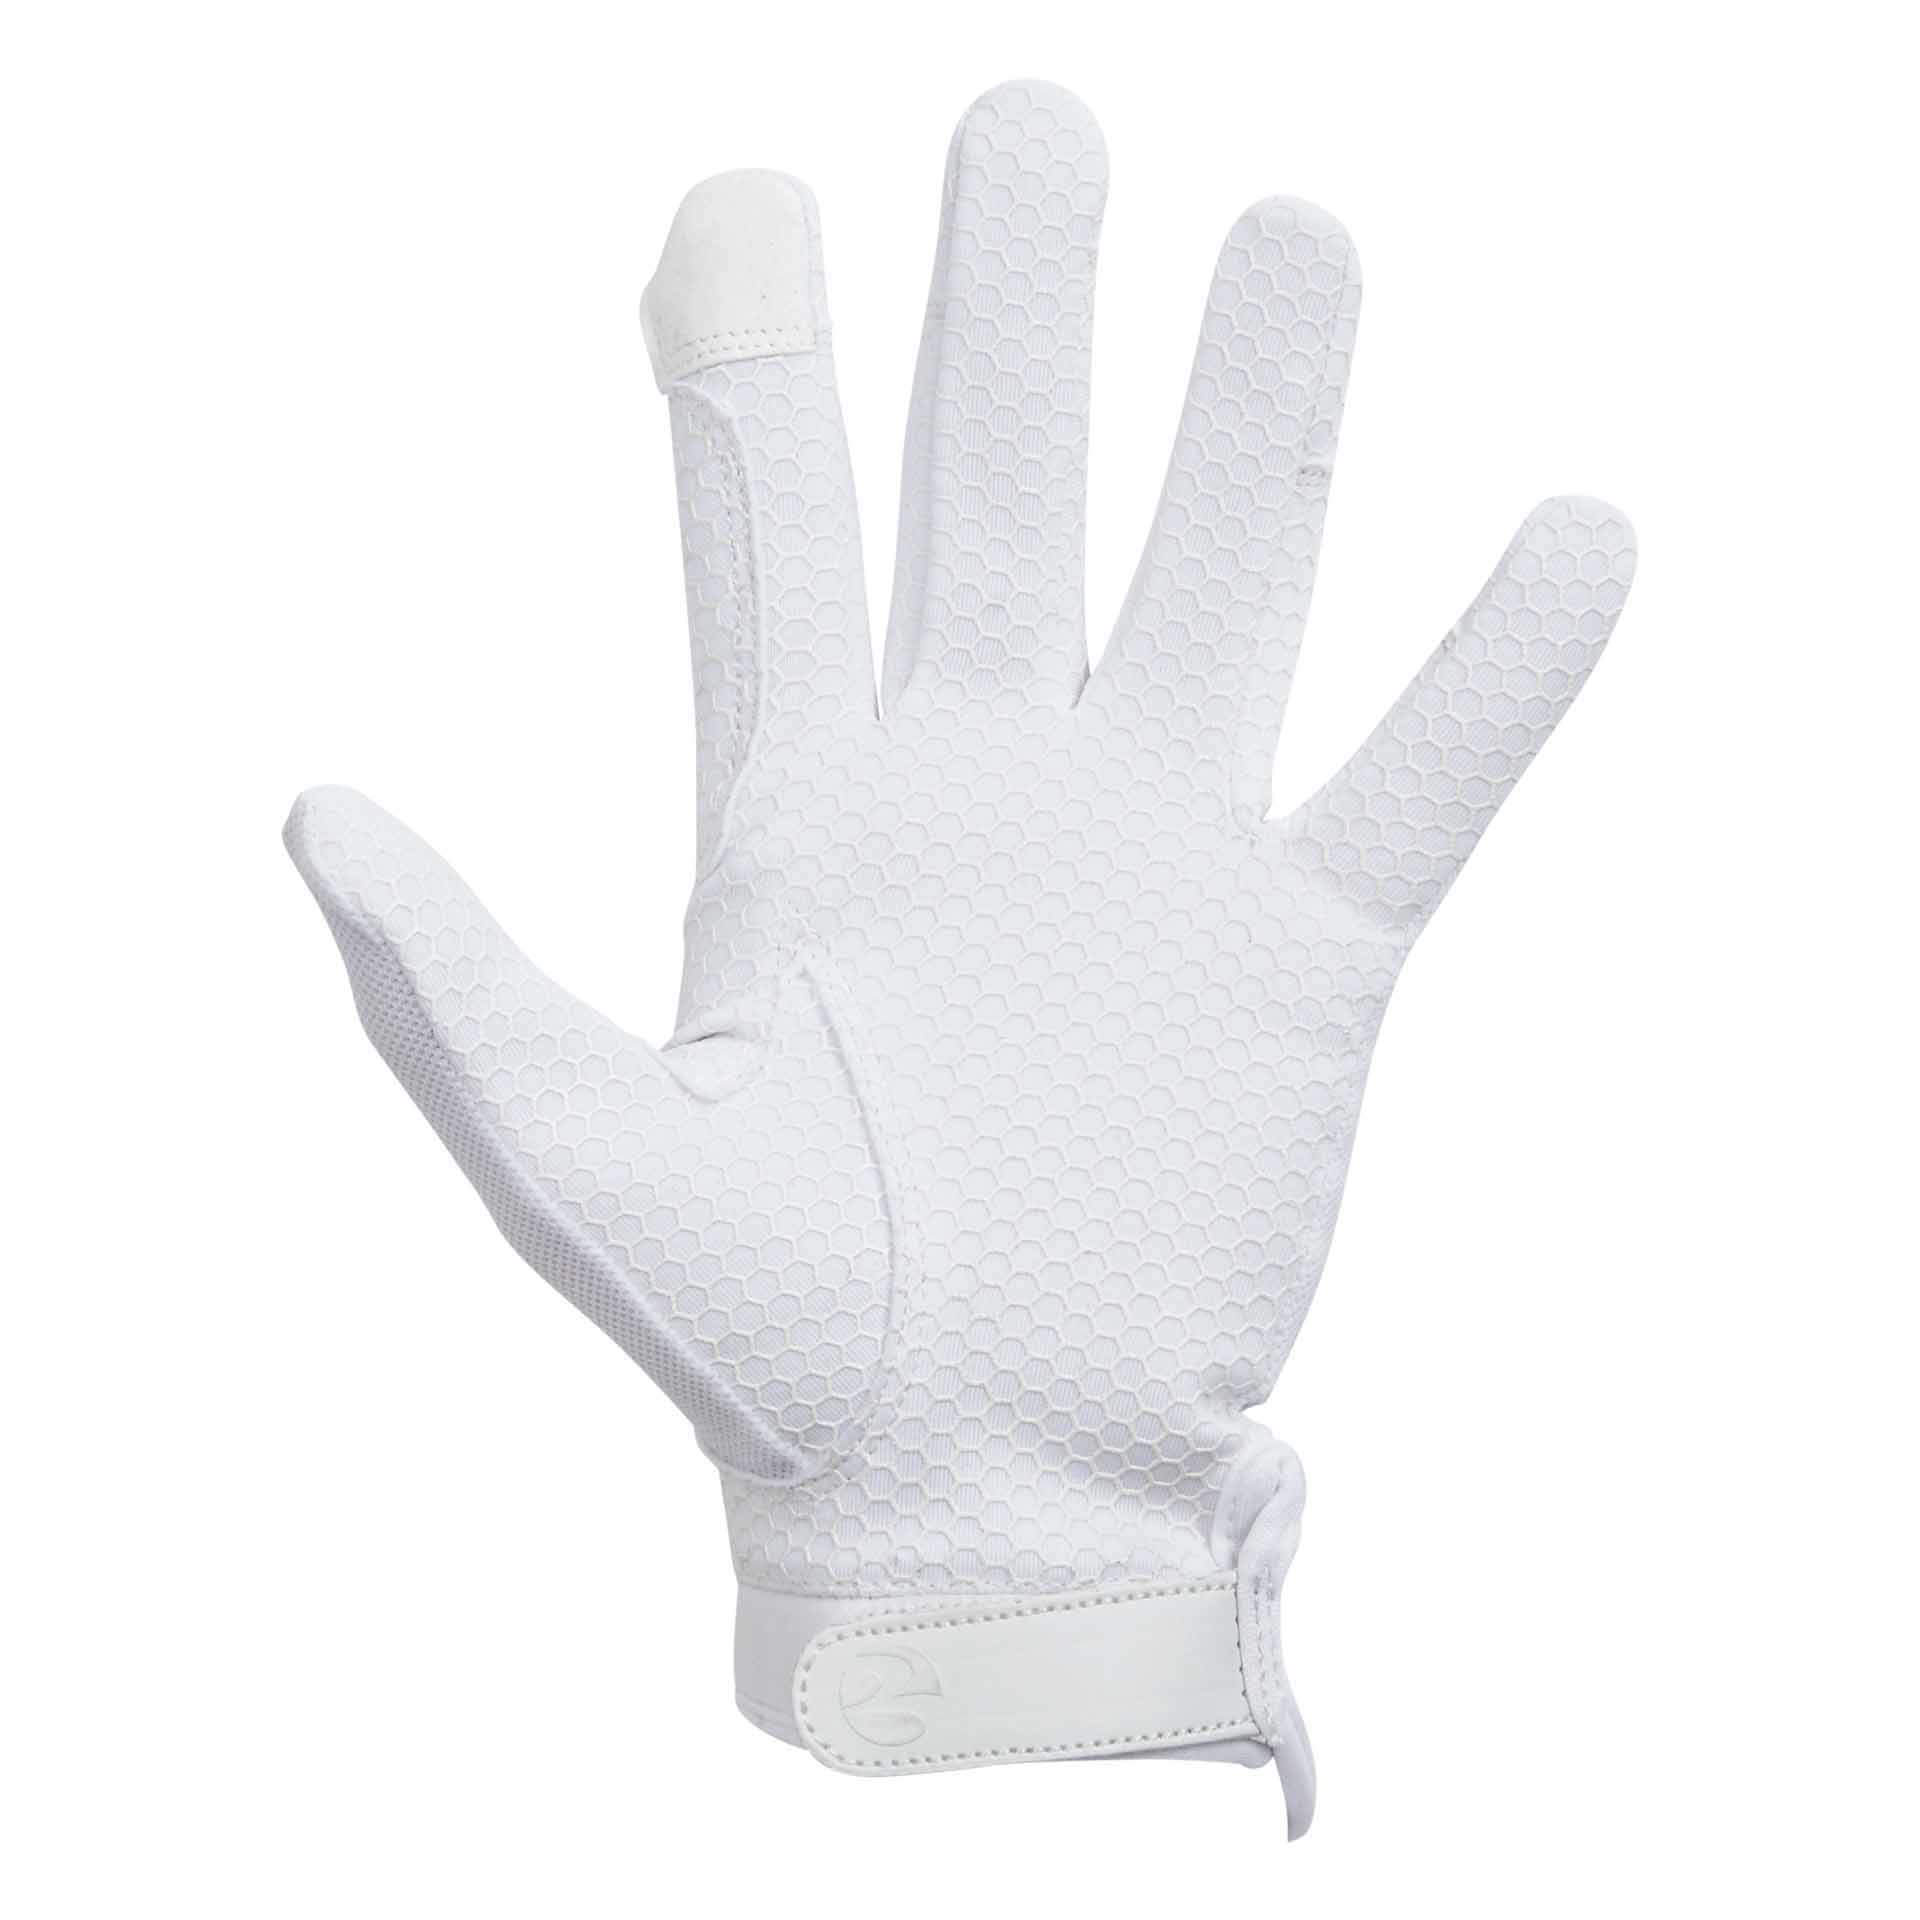 BUSSE Riding Gloves VALEA XS white